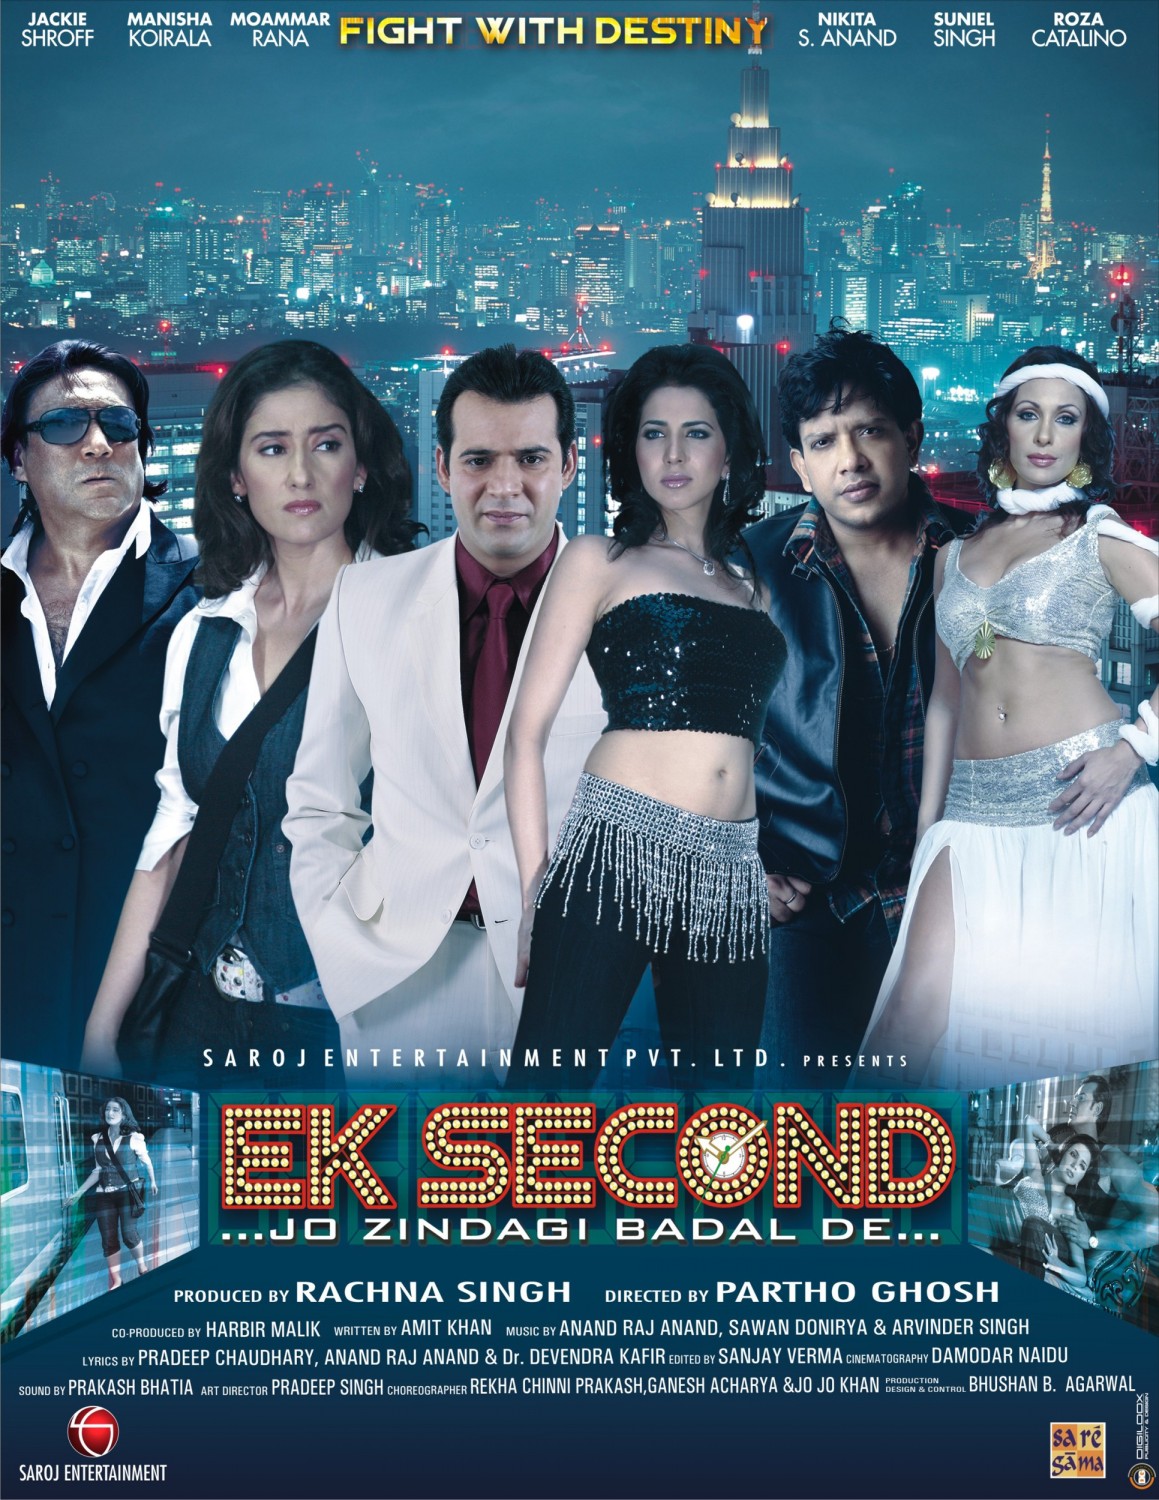 Extra Large Movie Poster Image for Ek Second... Jo Zindagi Badal De... 